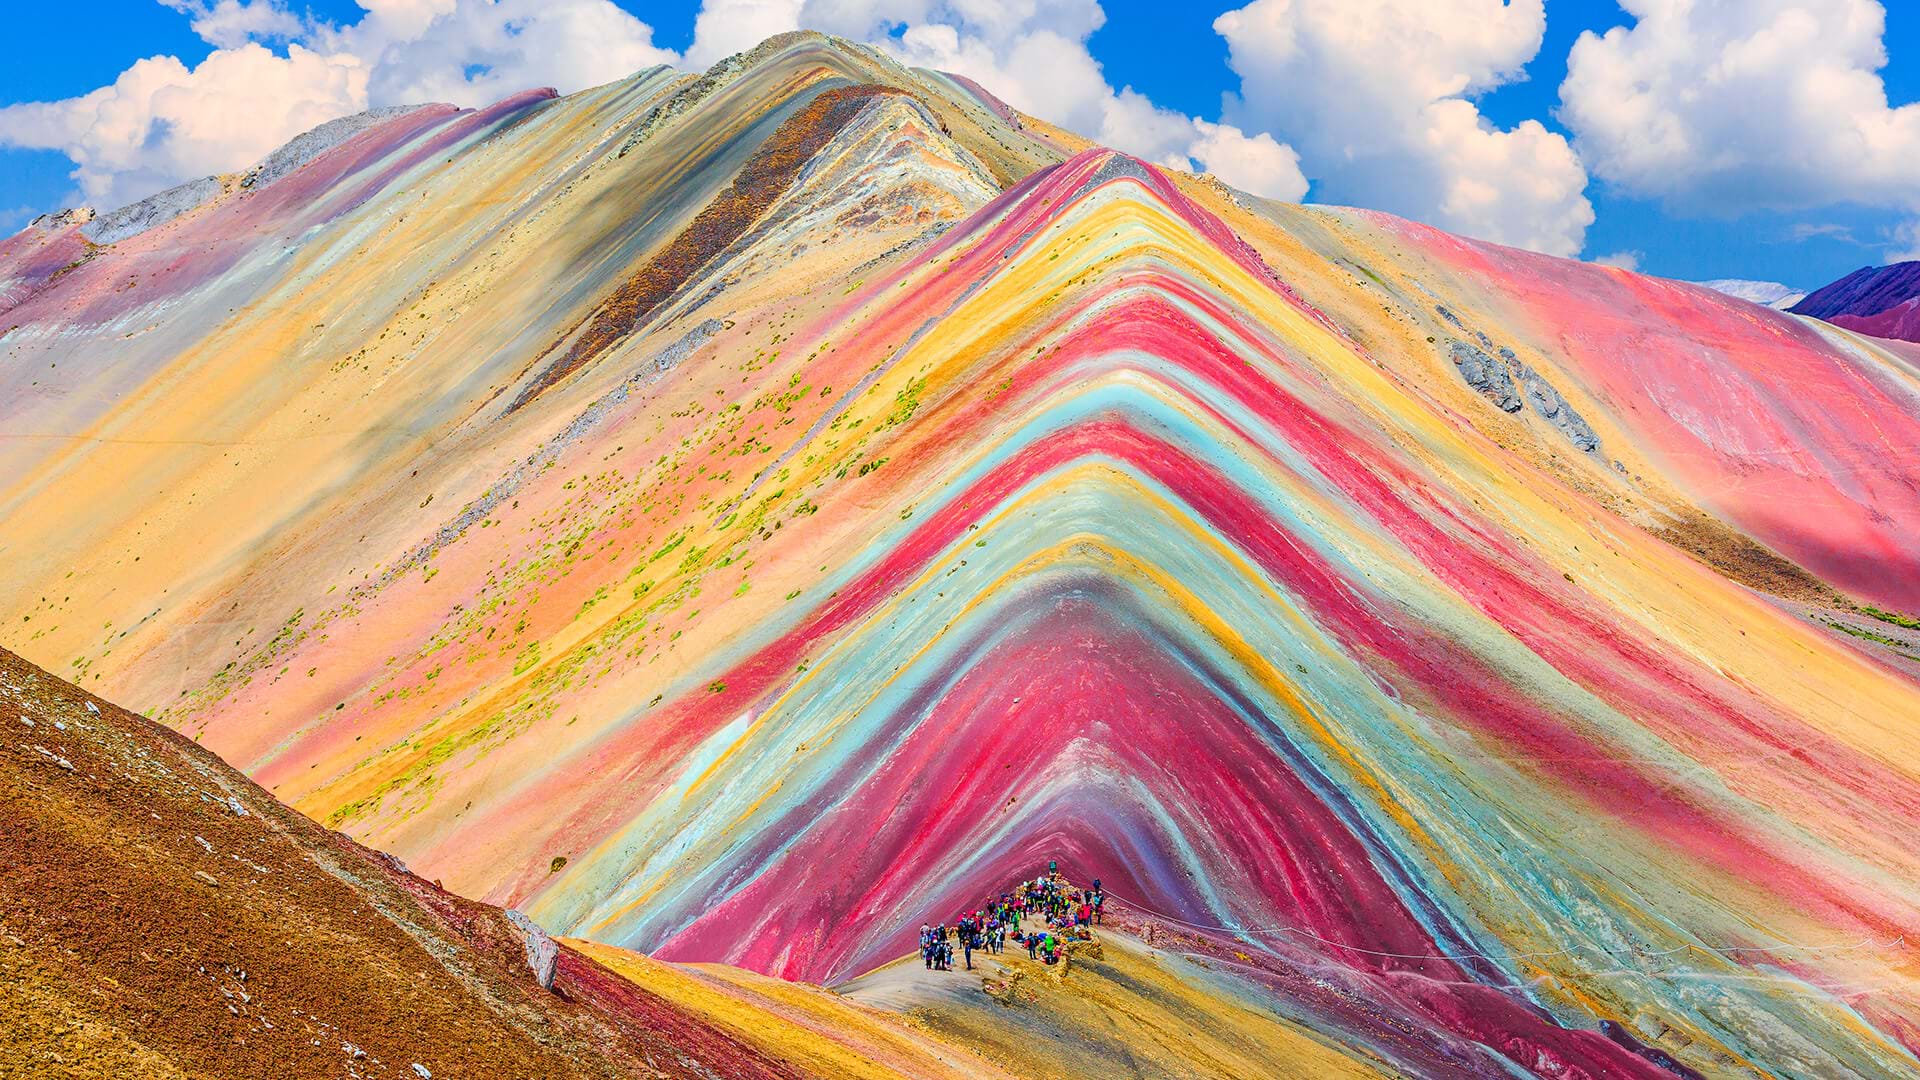 Rainbow Mountain - Wonderful geological formation